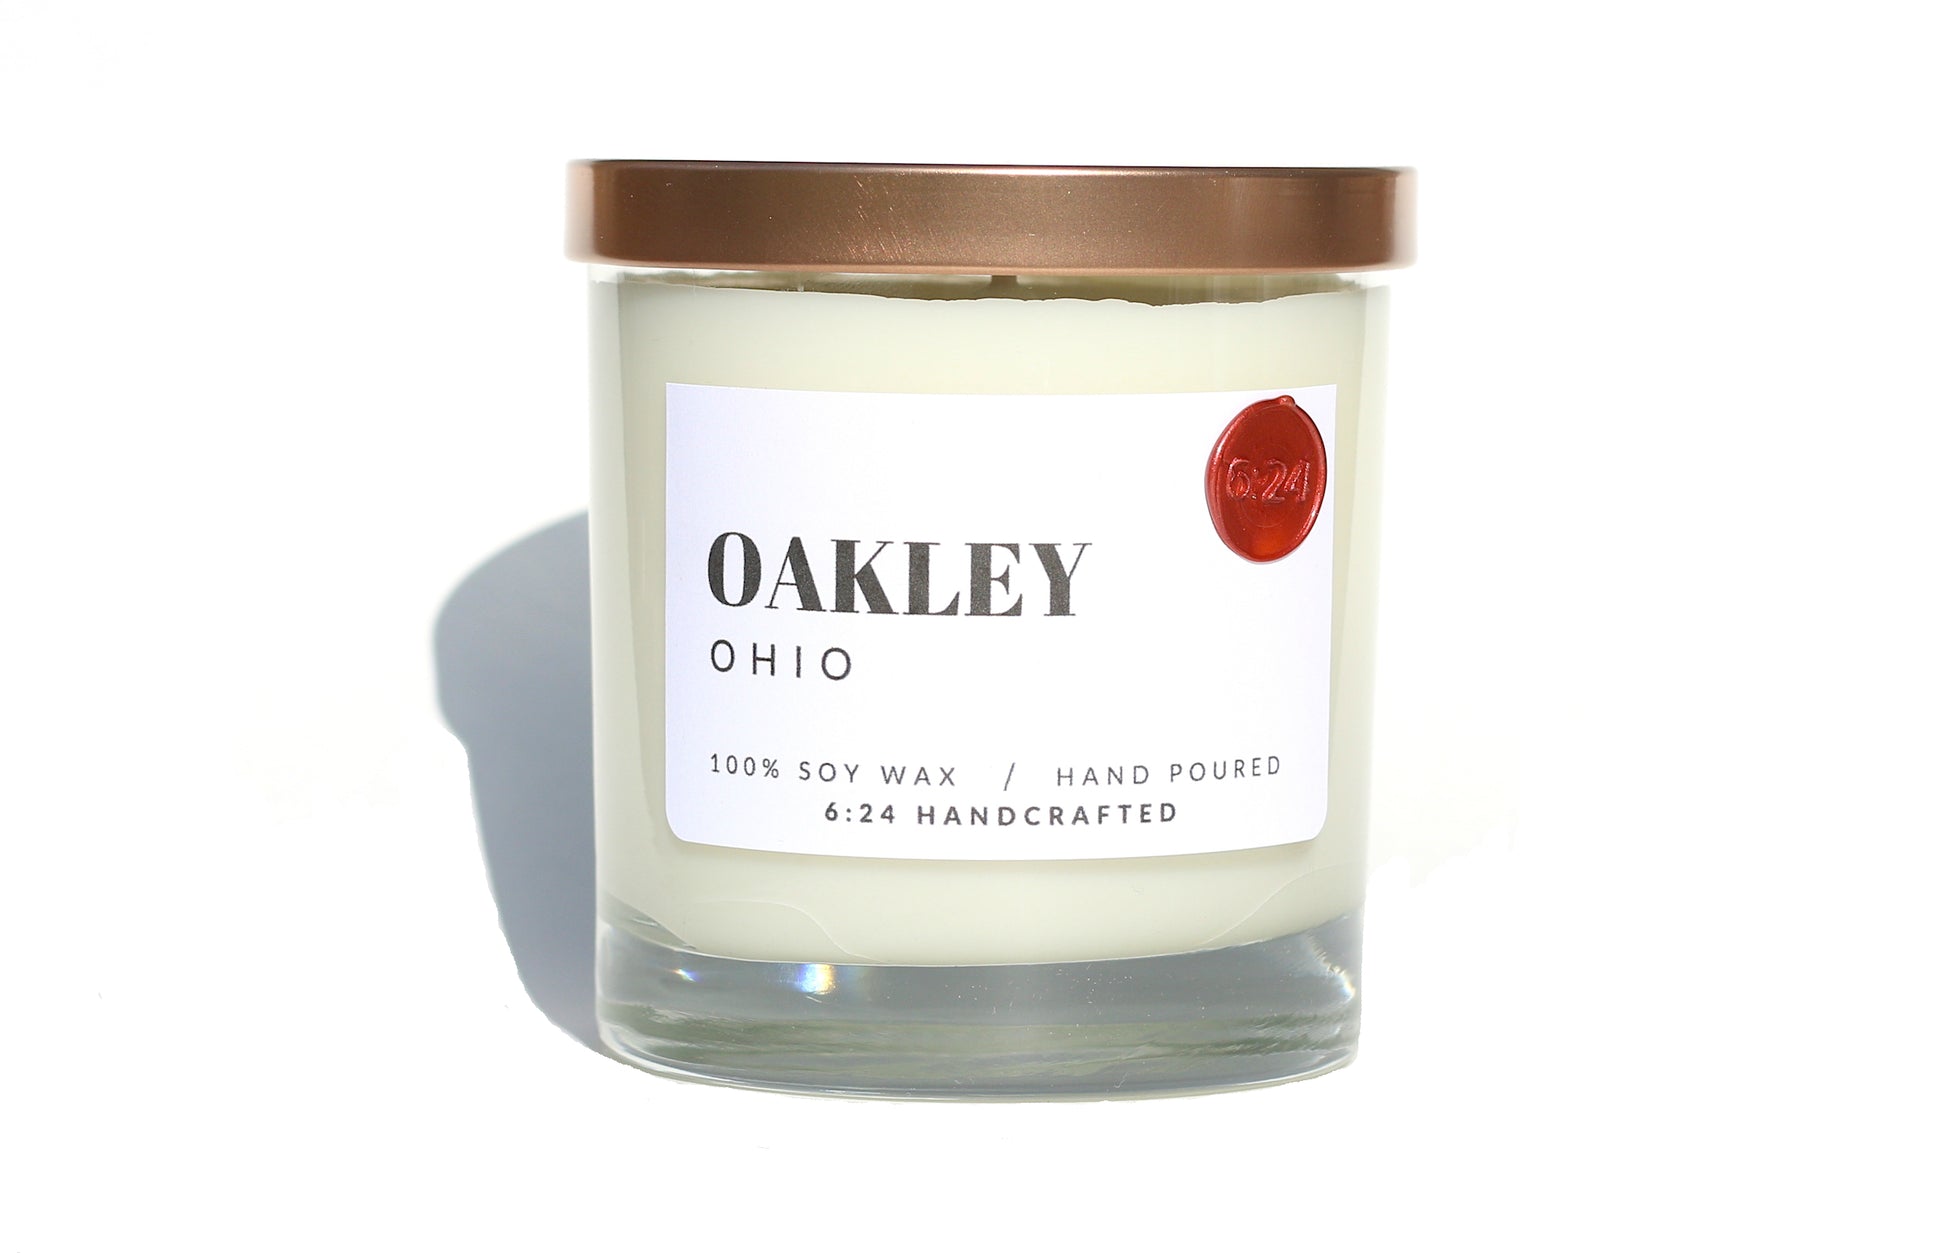 Oakley, Ohio candle